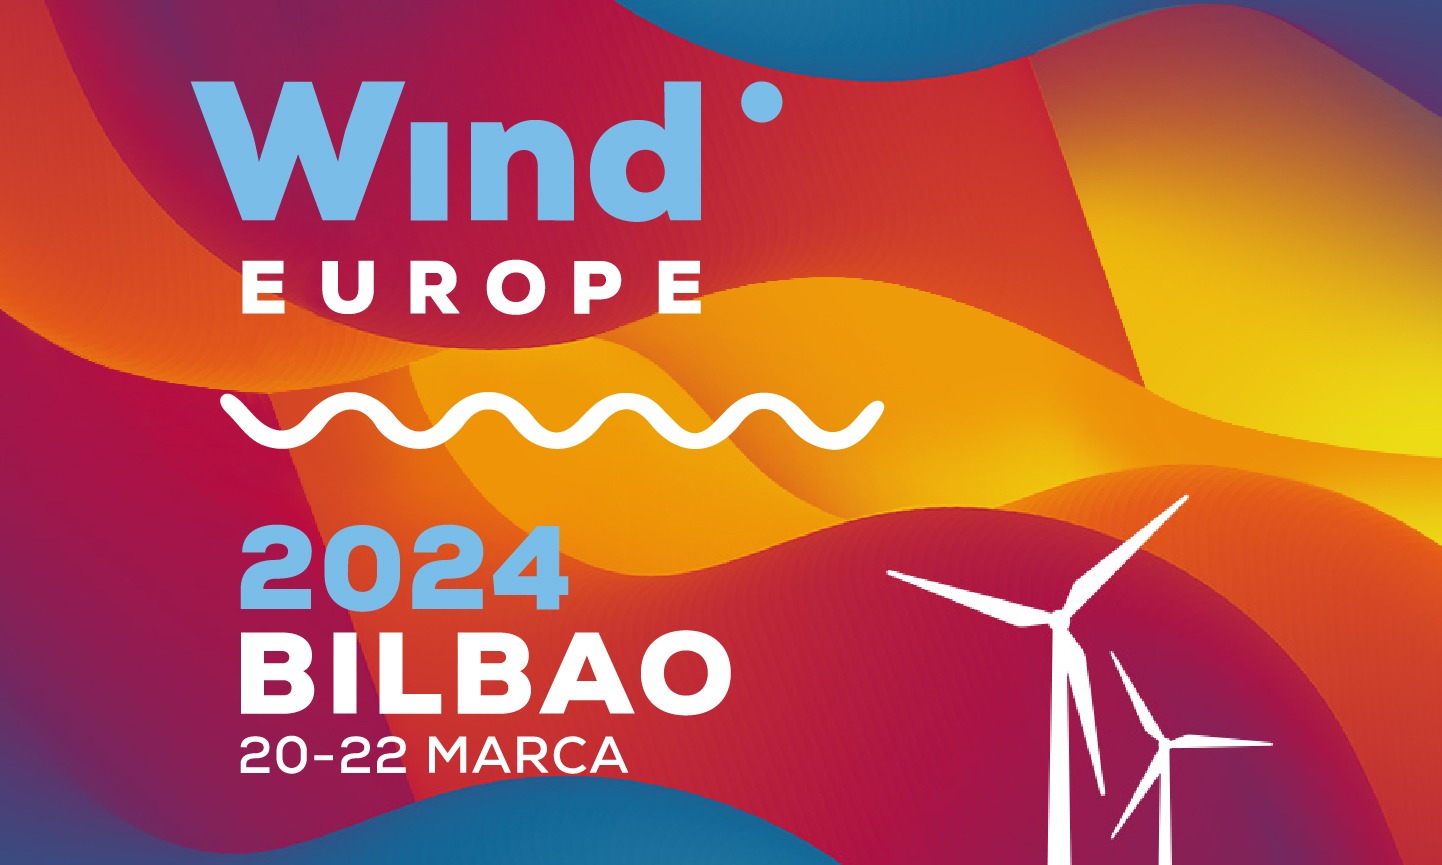 WindEurope Annual Event 2024 in Bilbao